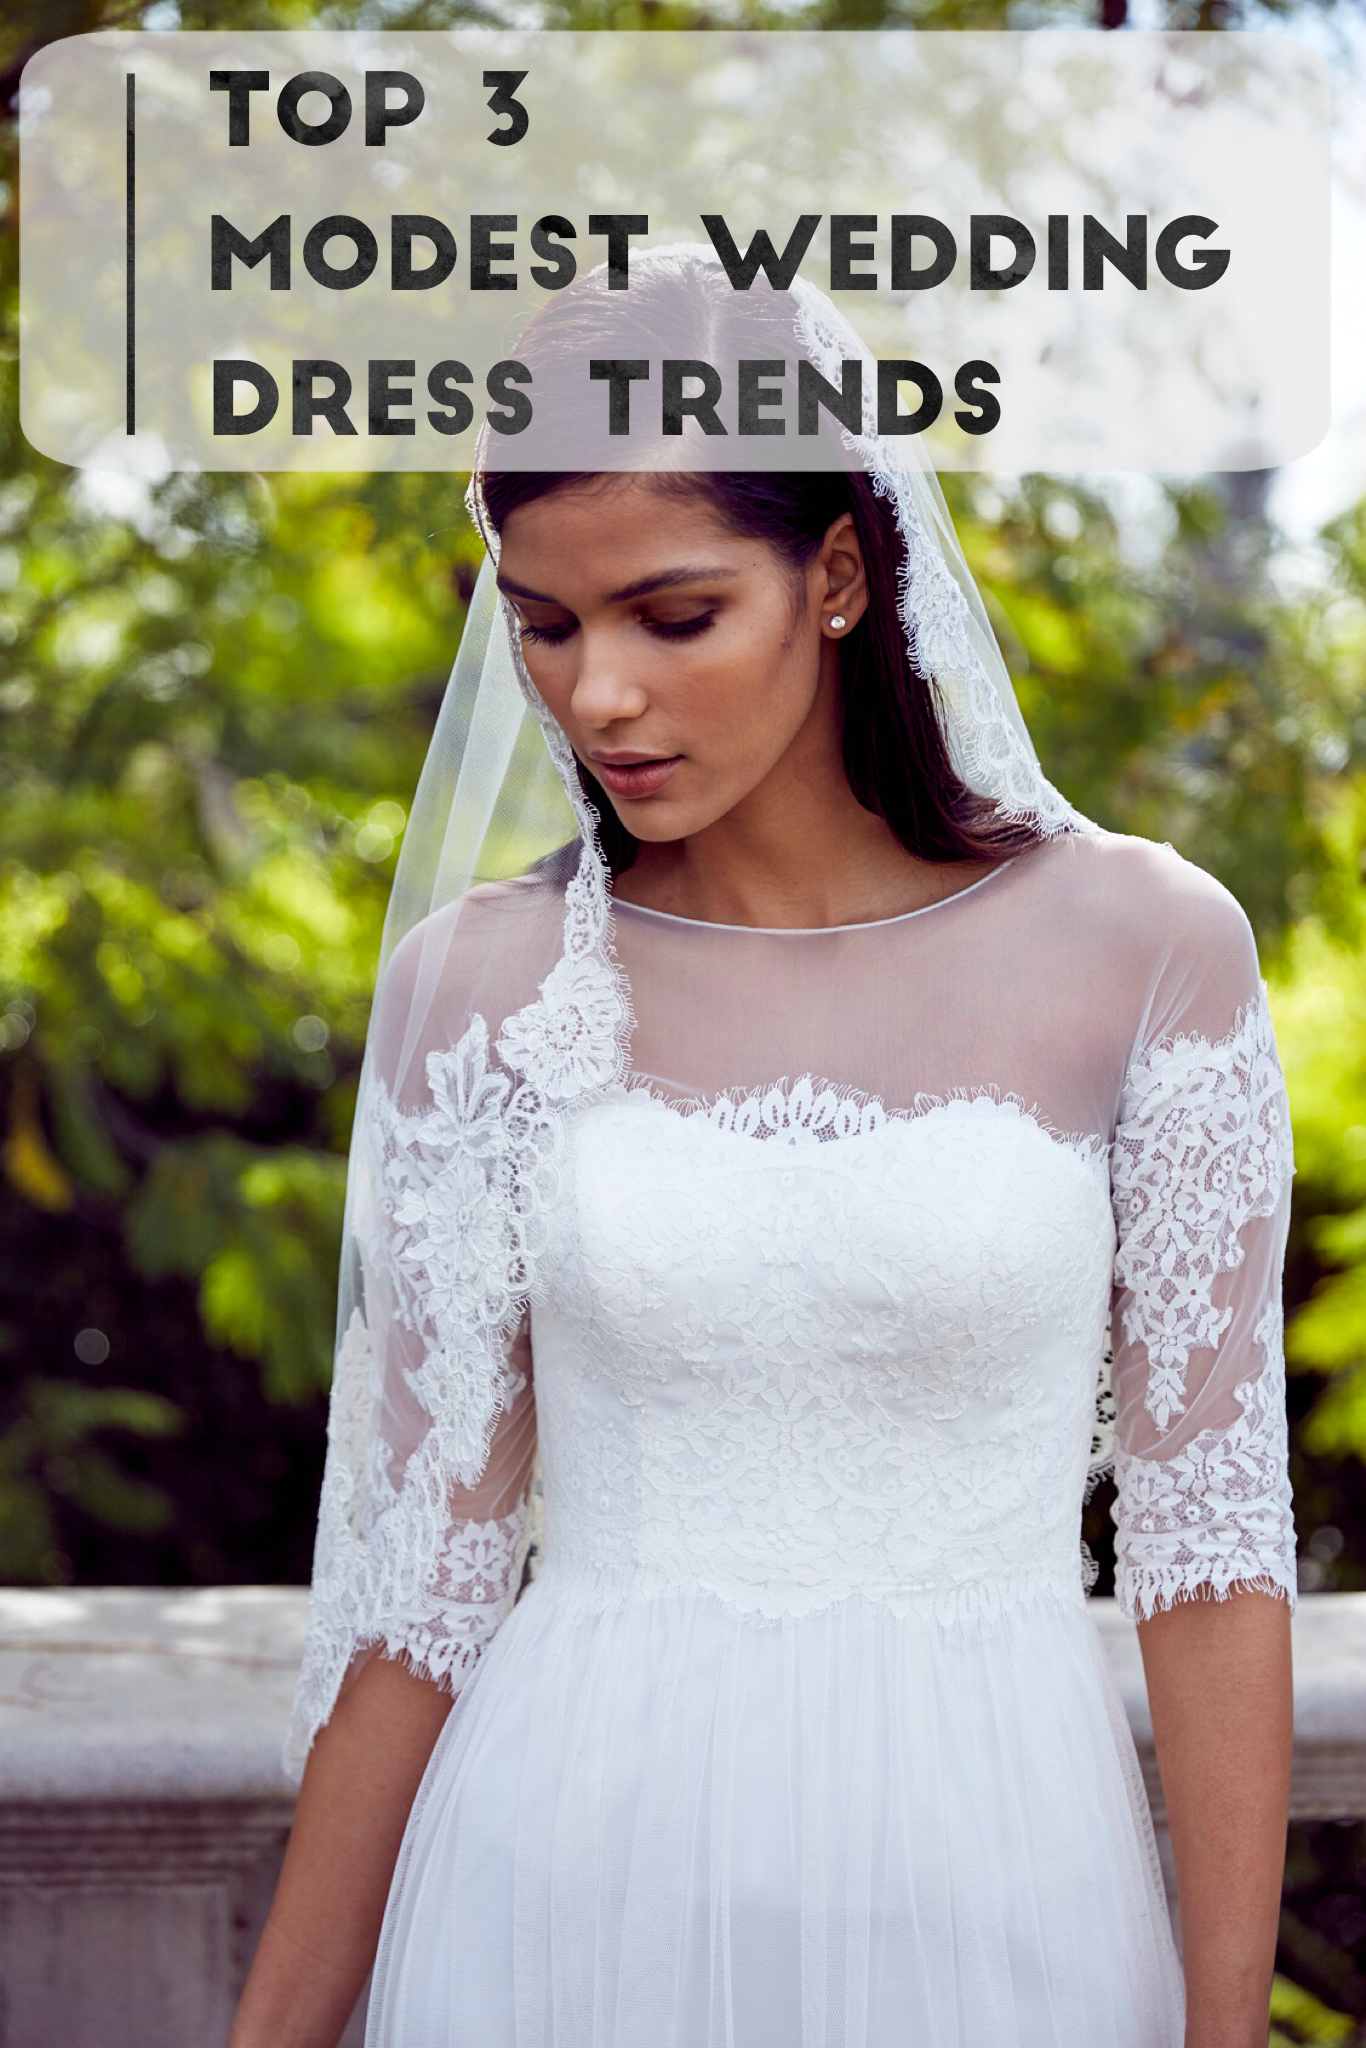 Top 3 modest wedding dress trends ft. David's Bridal - DowntownDemure.com